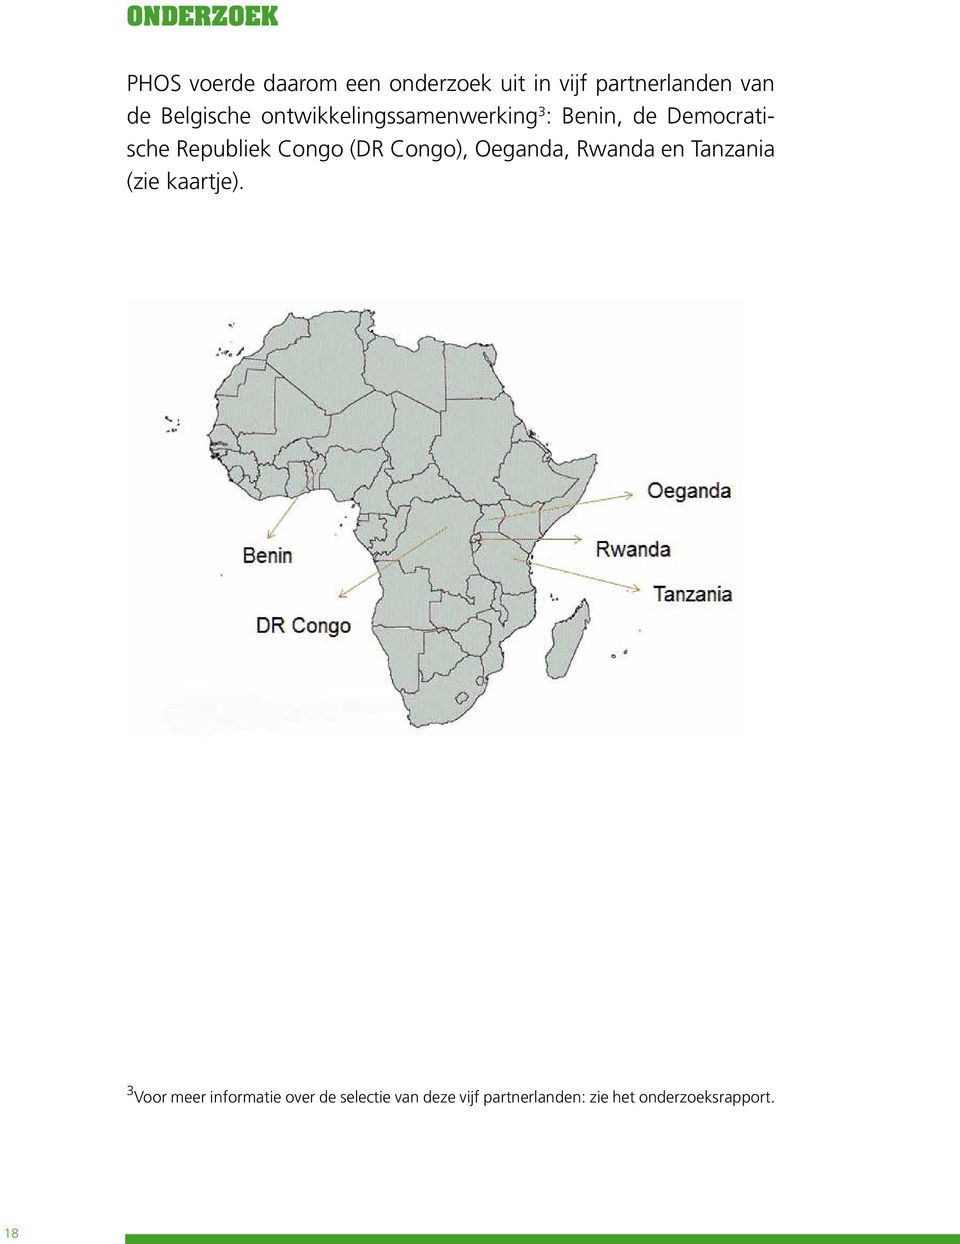 Congo (DR Congo), Oeganda, Rwanda en Tanzania (zie kaartje).